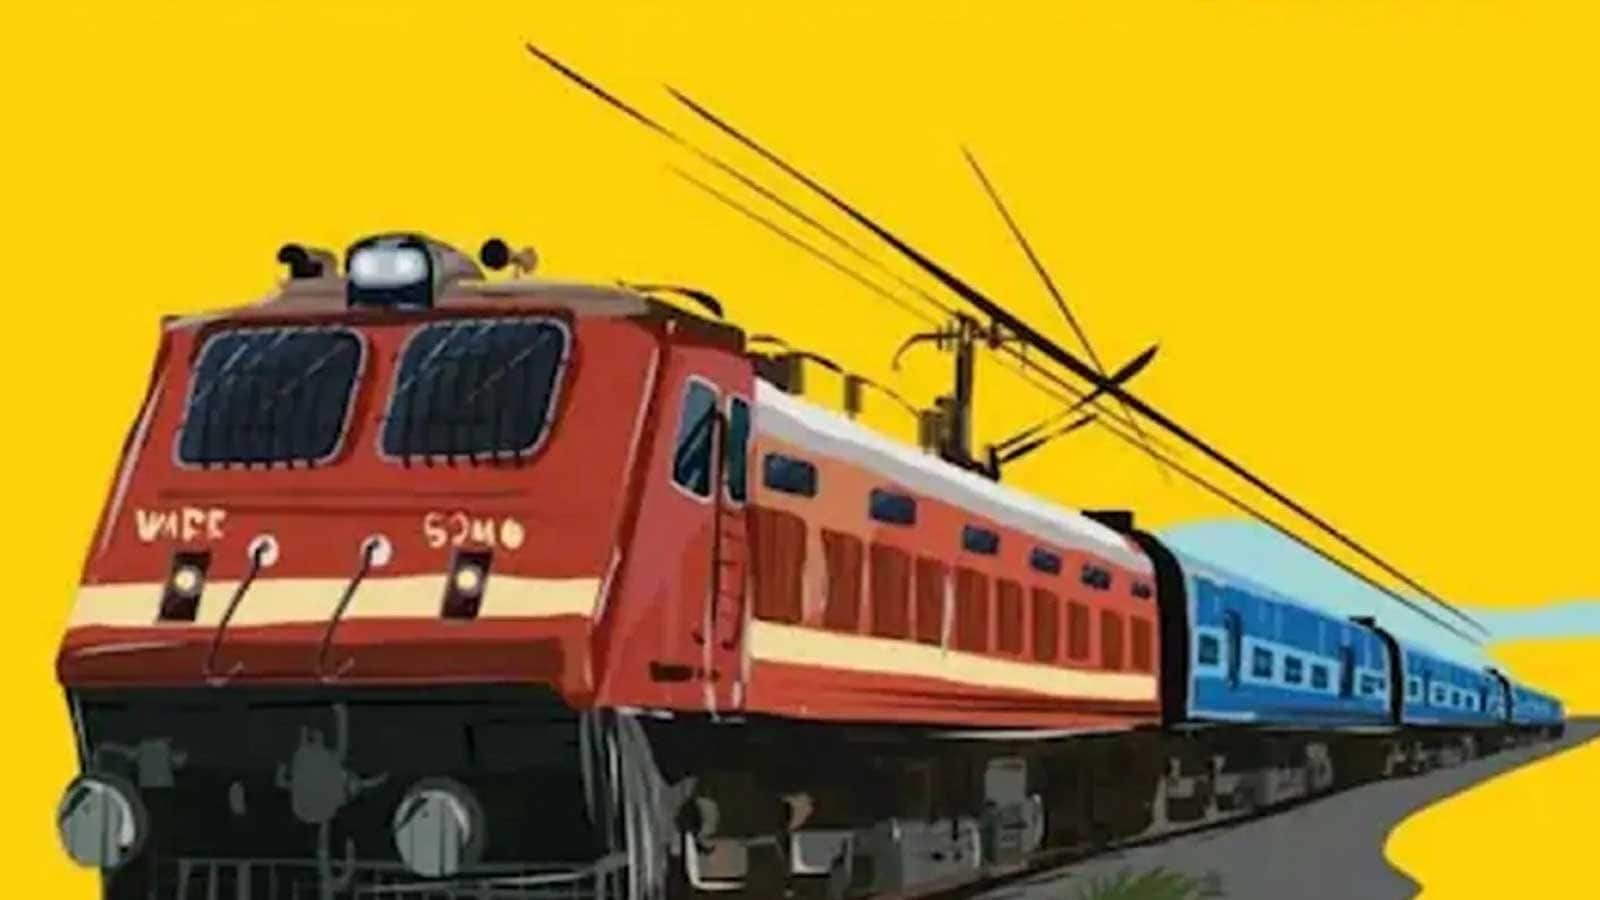 How to draw Mumbai Local Train at Railway Station - YouTube